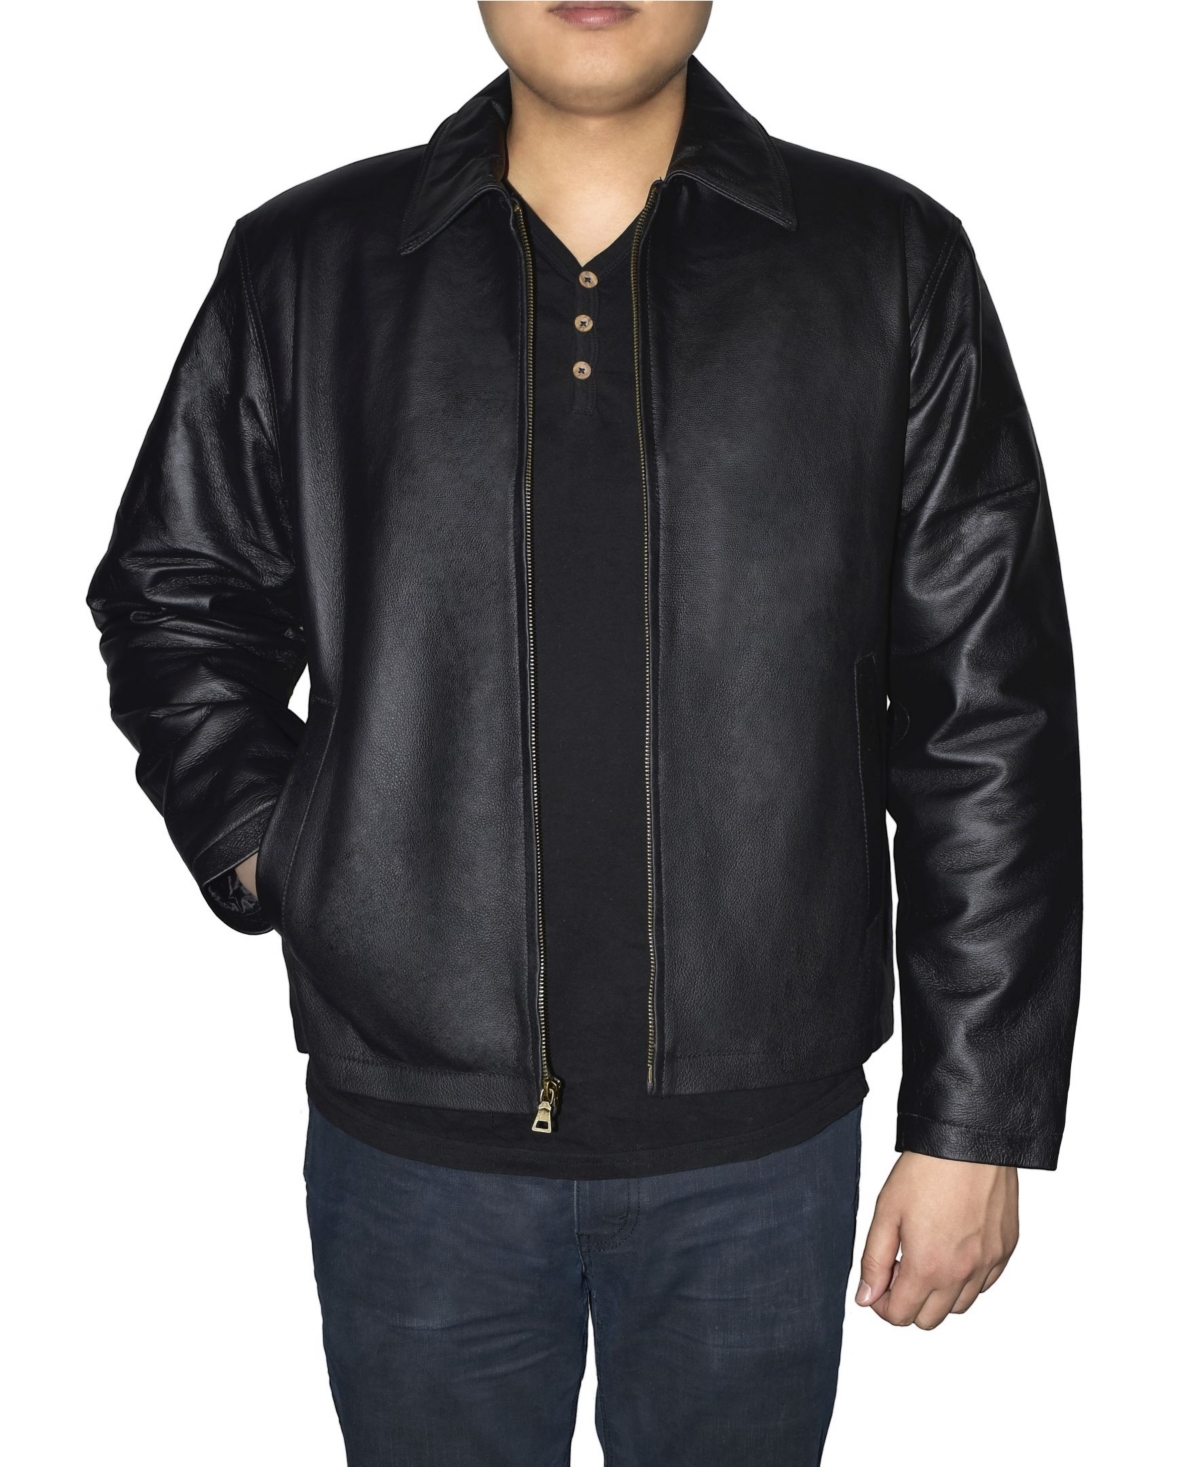 Retro Leather Men's Jacket - Black